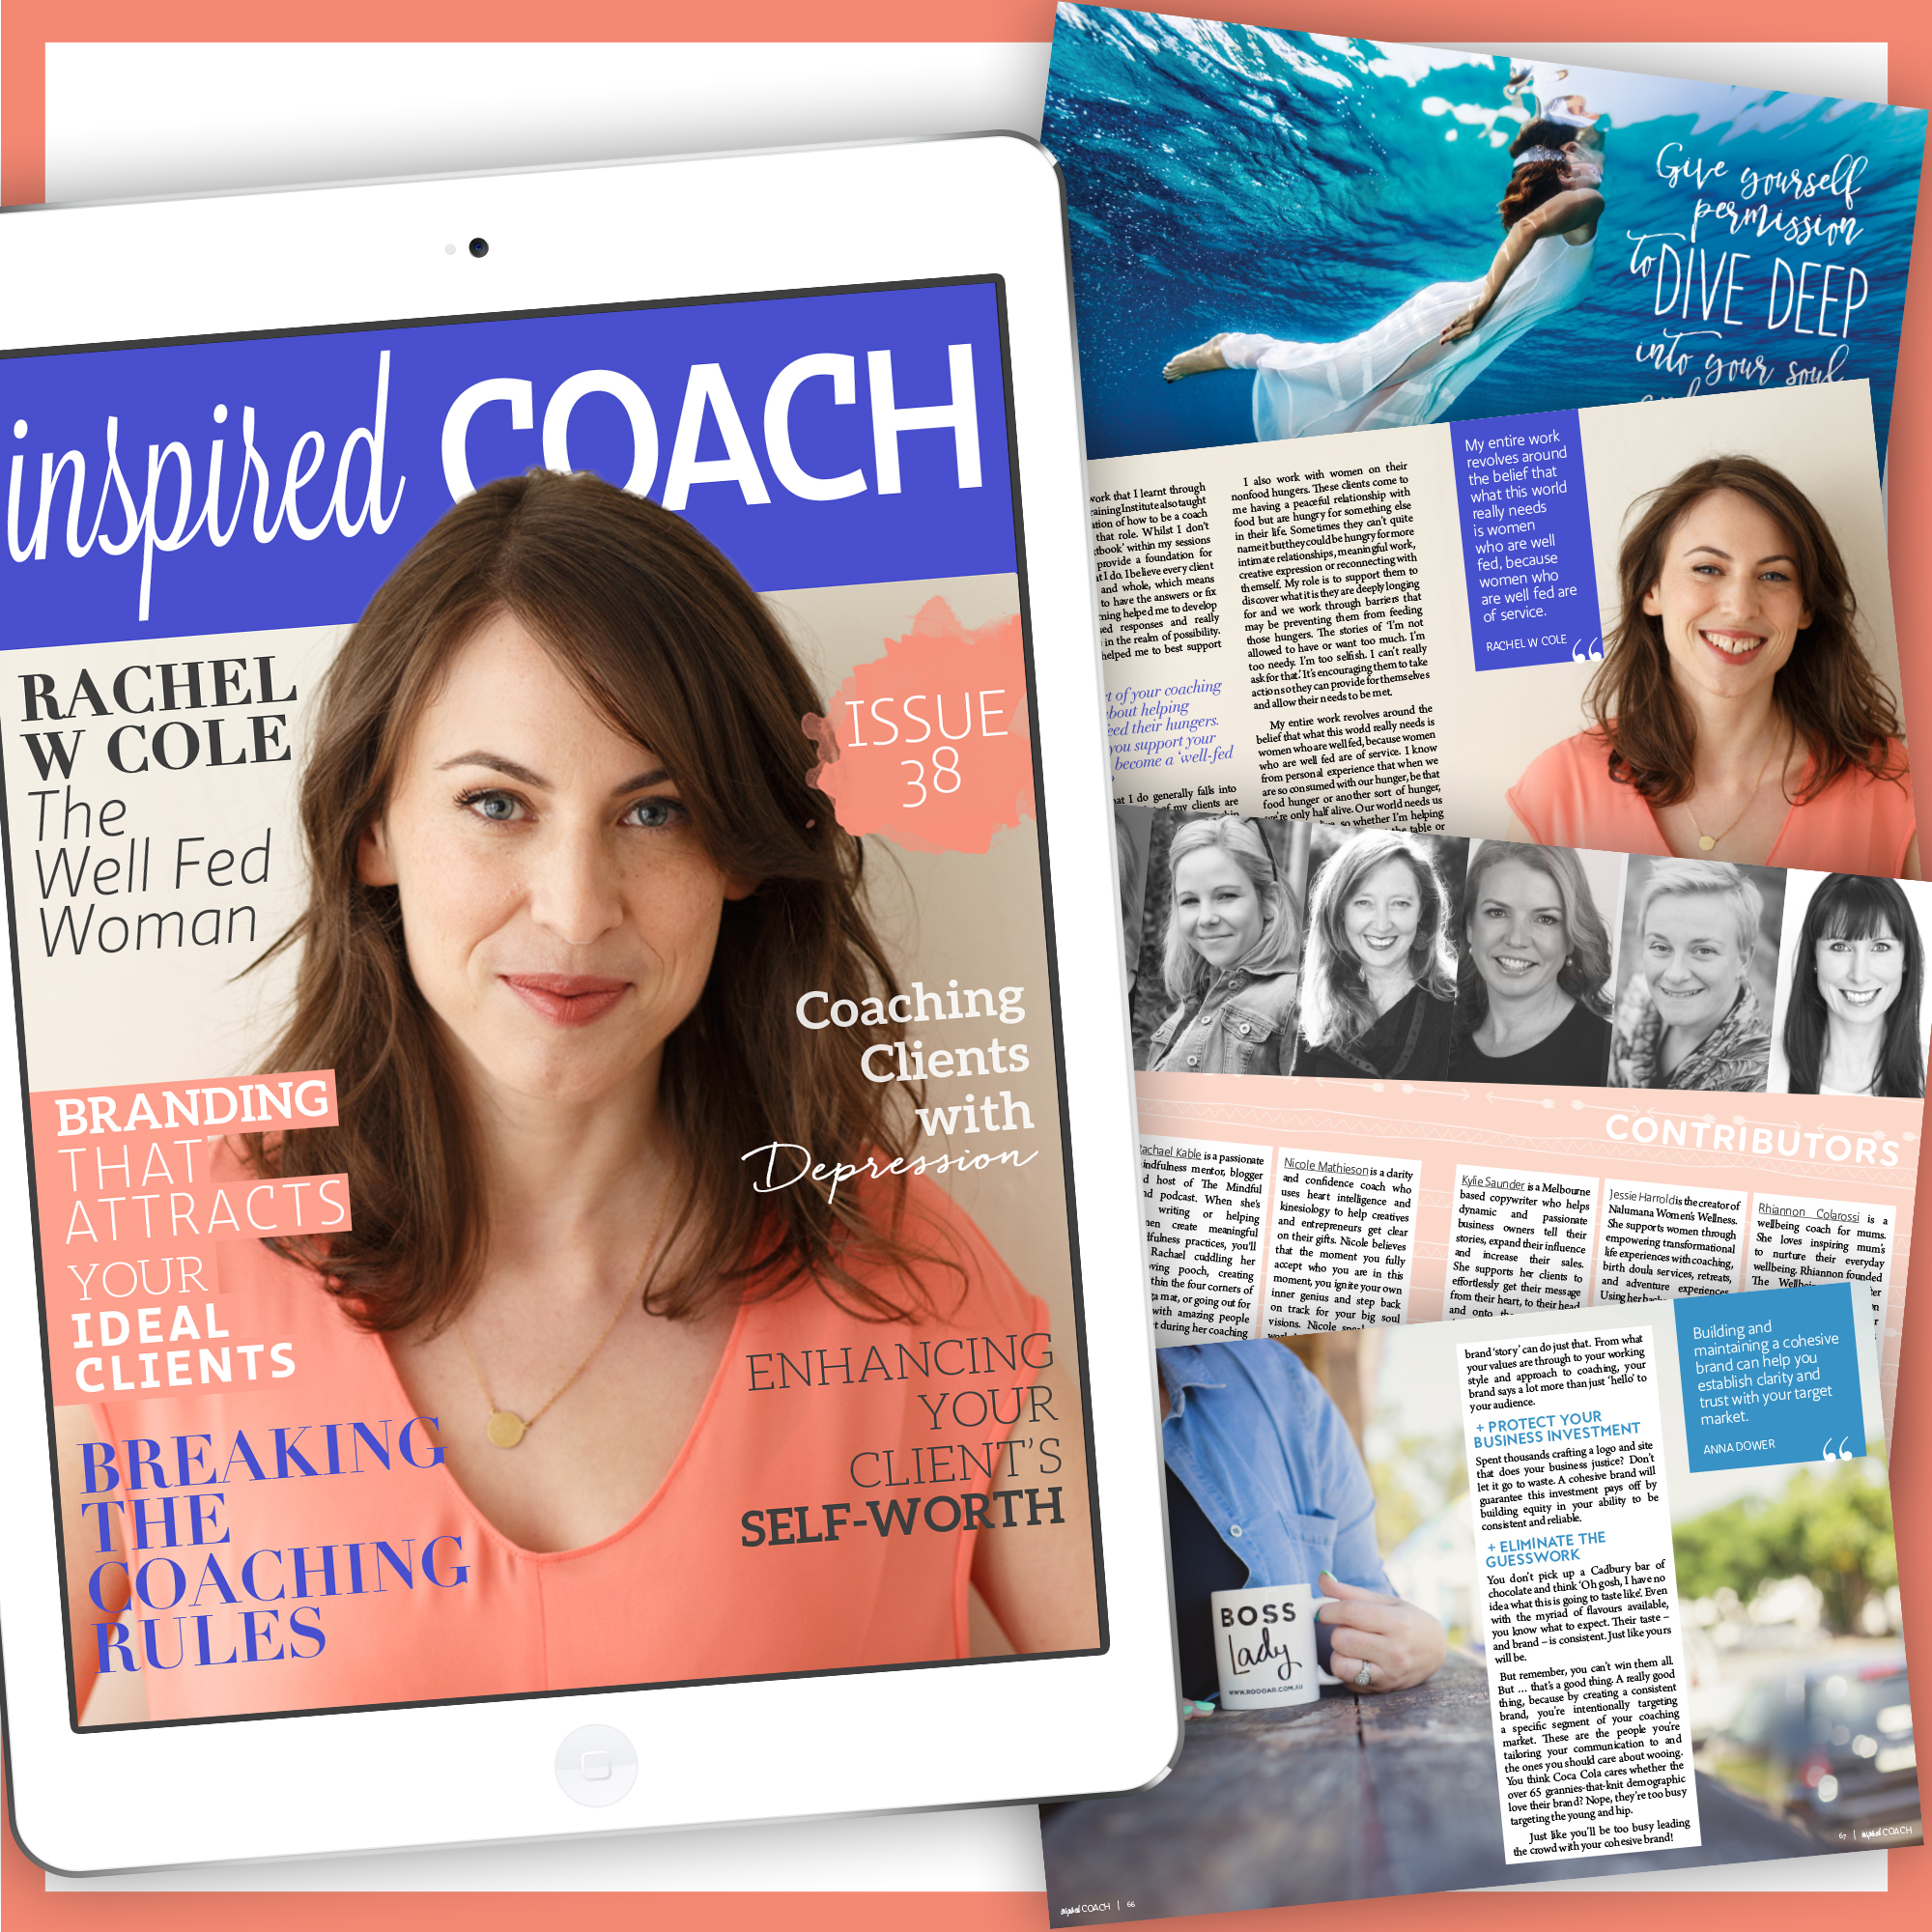  eMagazine design for inspired Coach - Beautiful You Coaching Academy. 